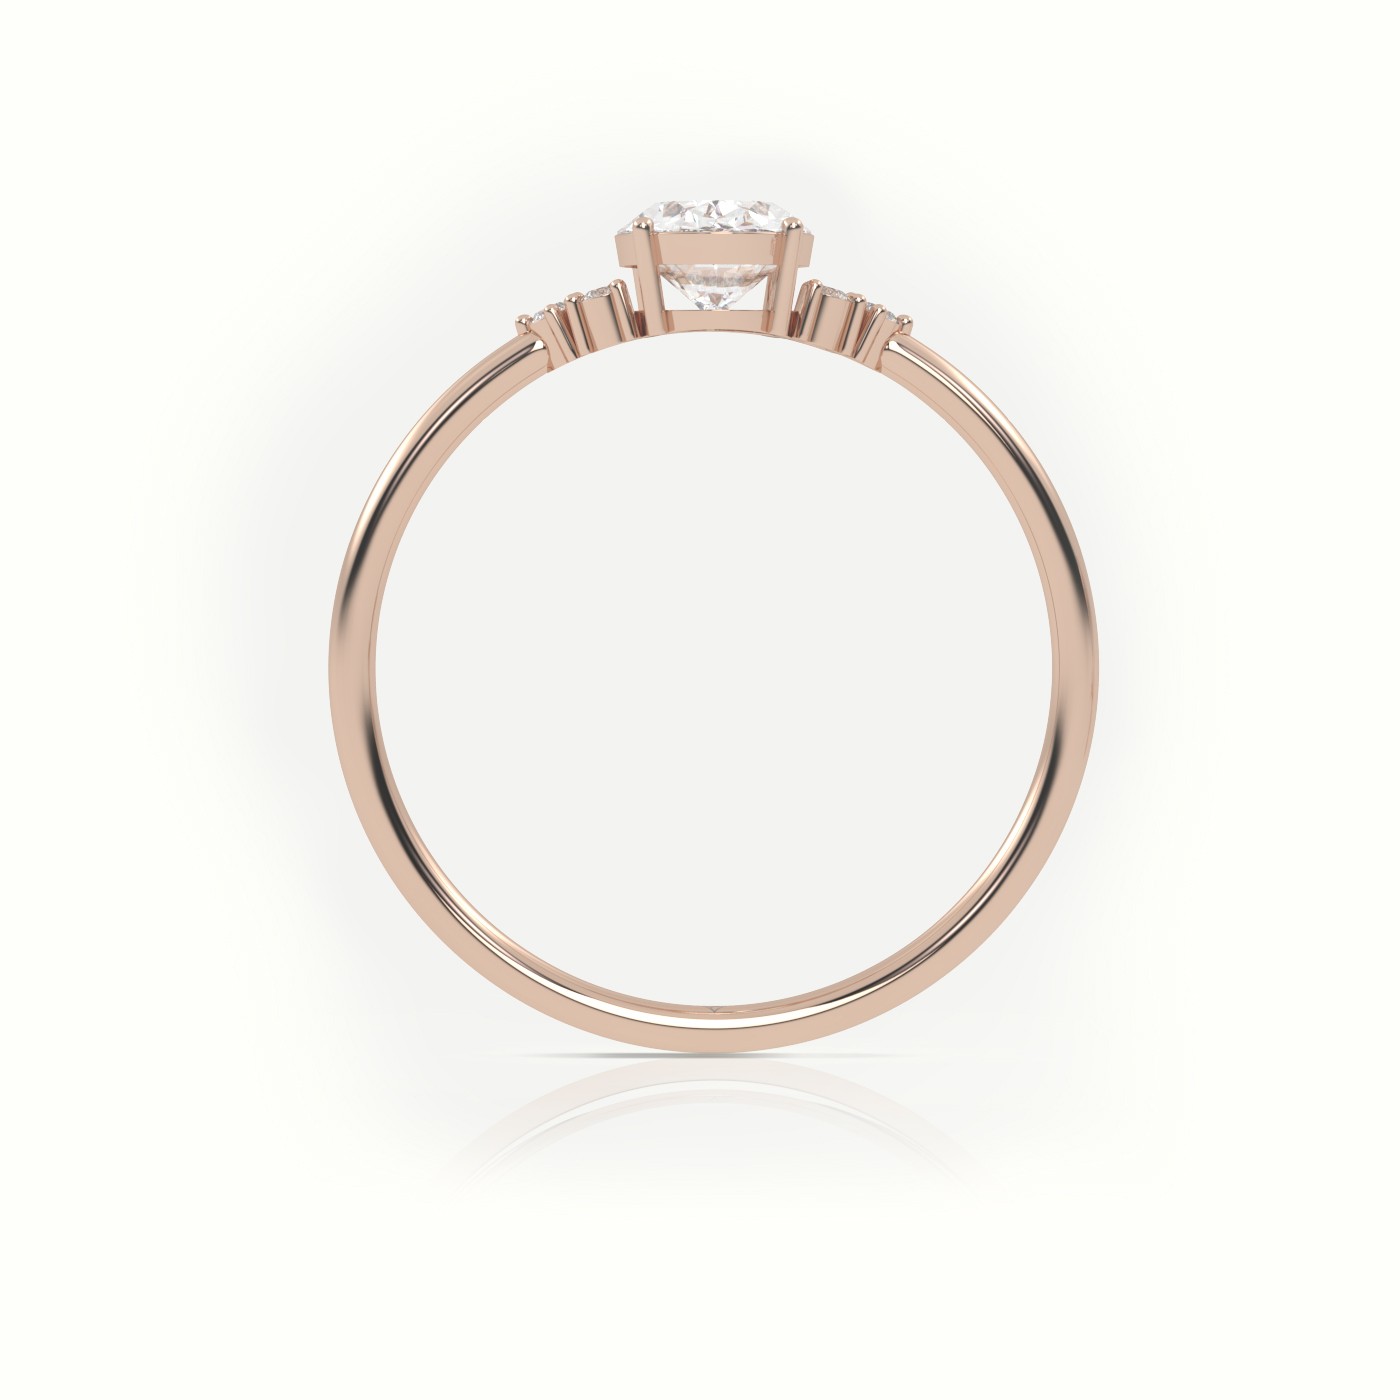 18K ROSE GOLD OVAL CUT DIAMOND 4 PRONGS SIDE STONE DESIGNER RING